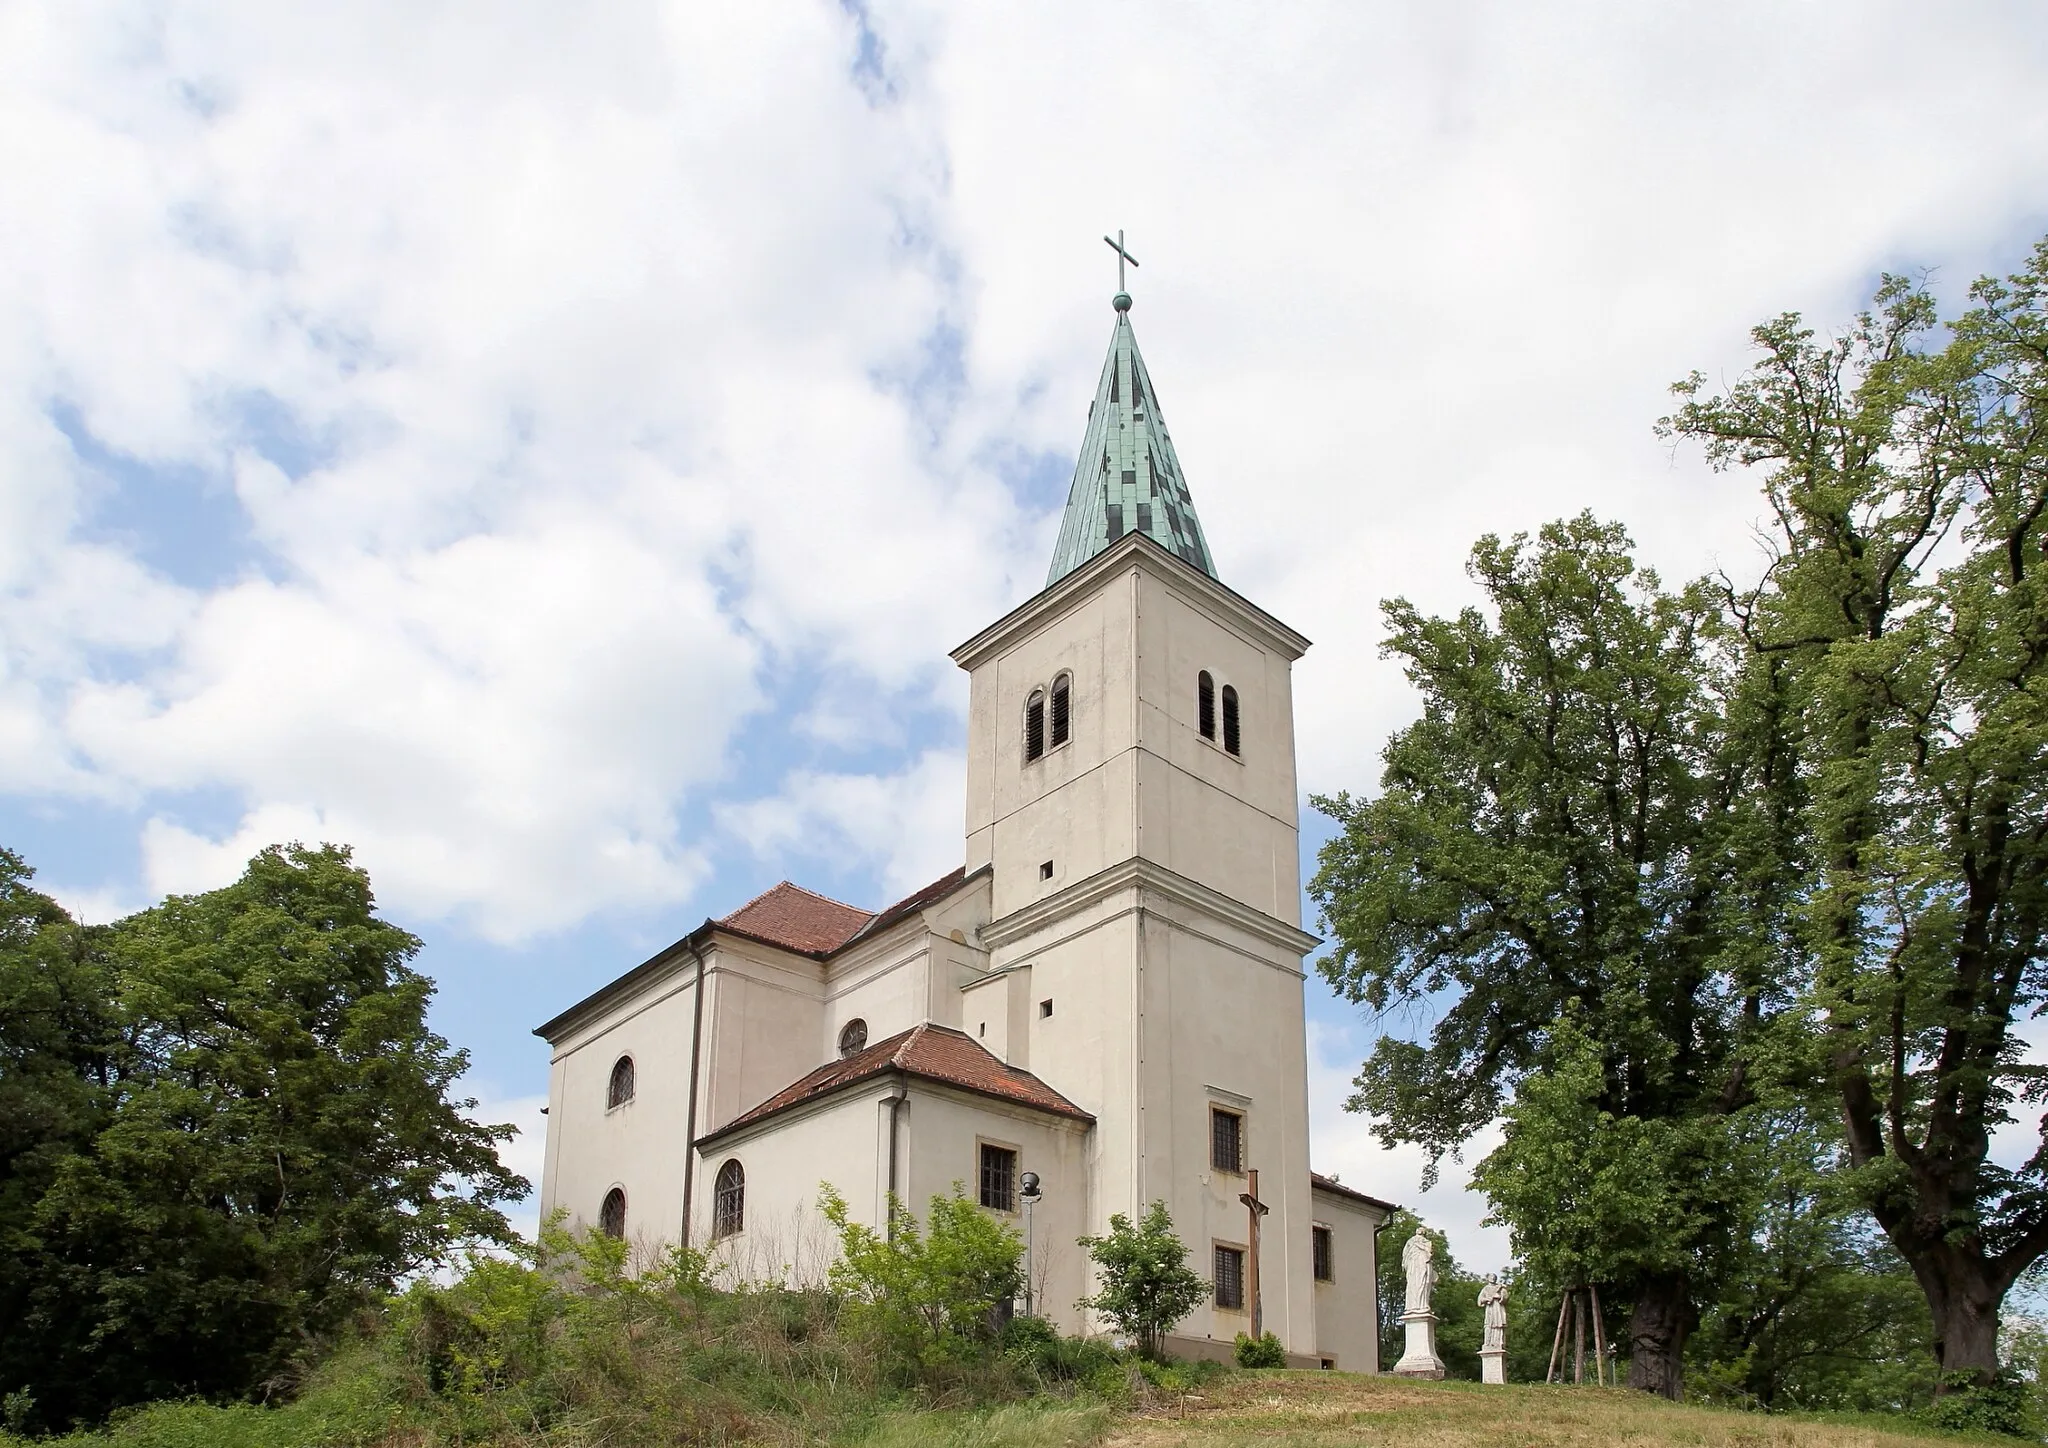 Photo showing: South view of the parish church Karnabrunn in Großrußbach, Lower Austria.